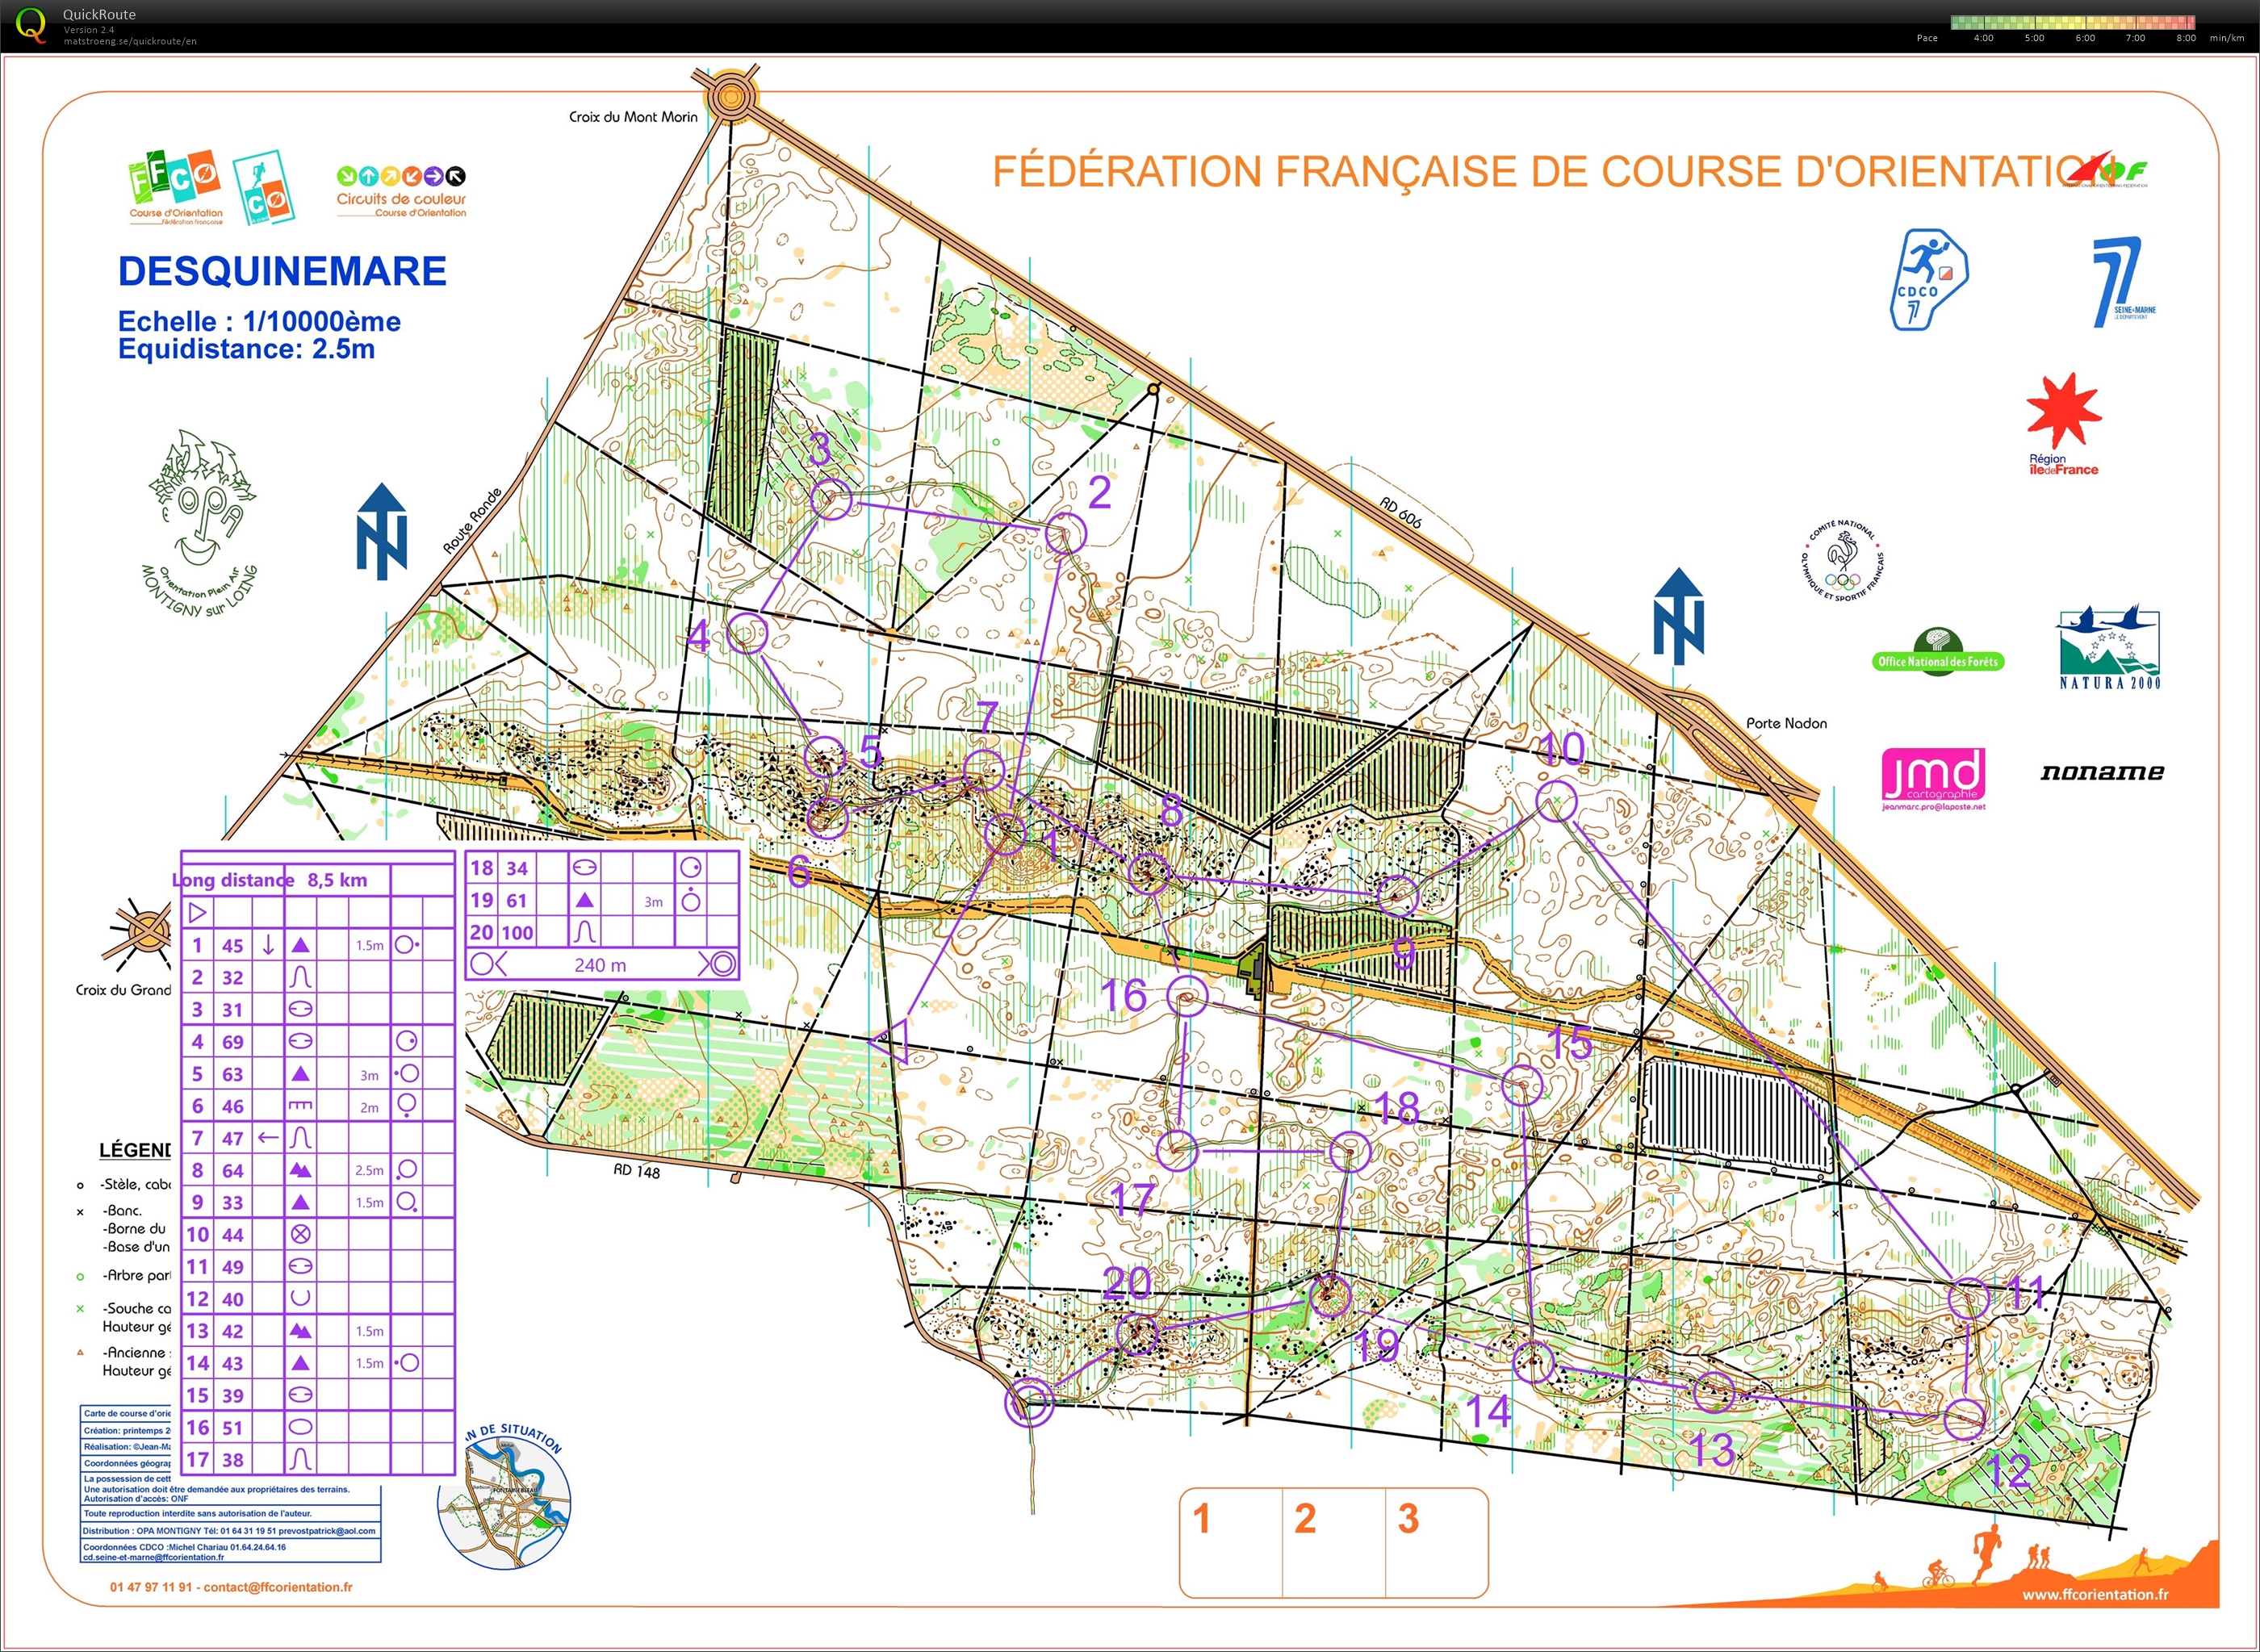 BeArrows camp Fontainebleau: Long Distance (26/02/2022)